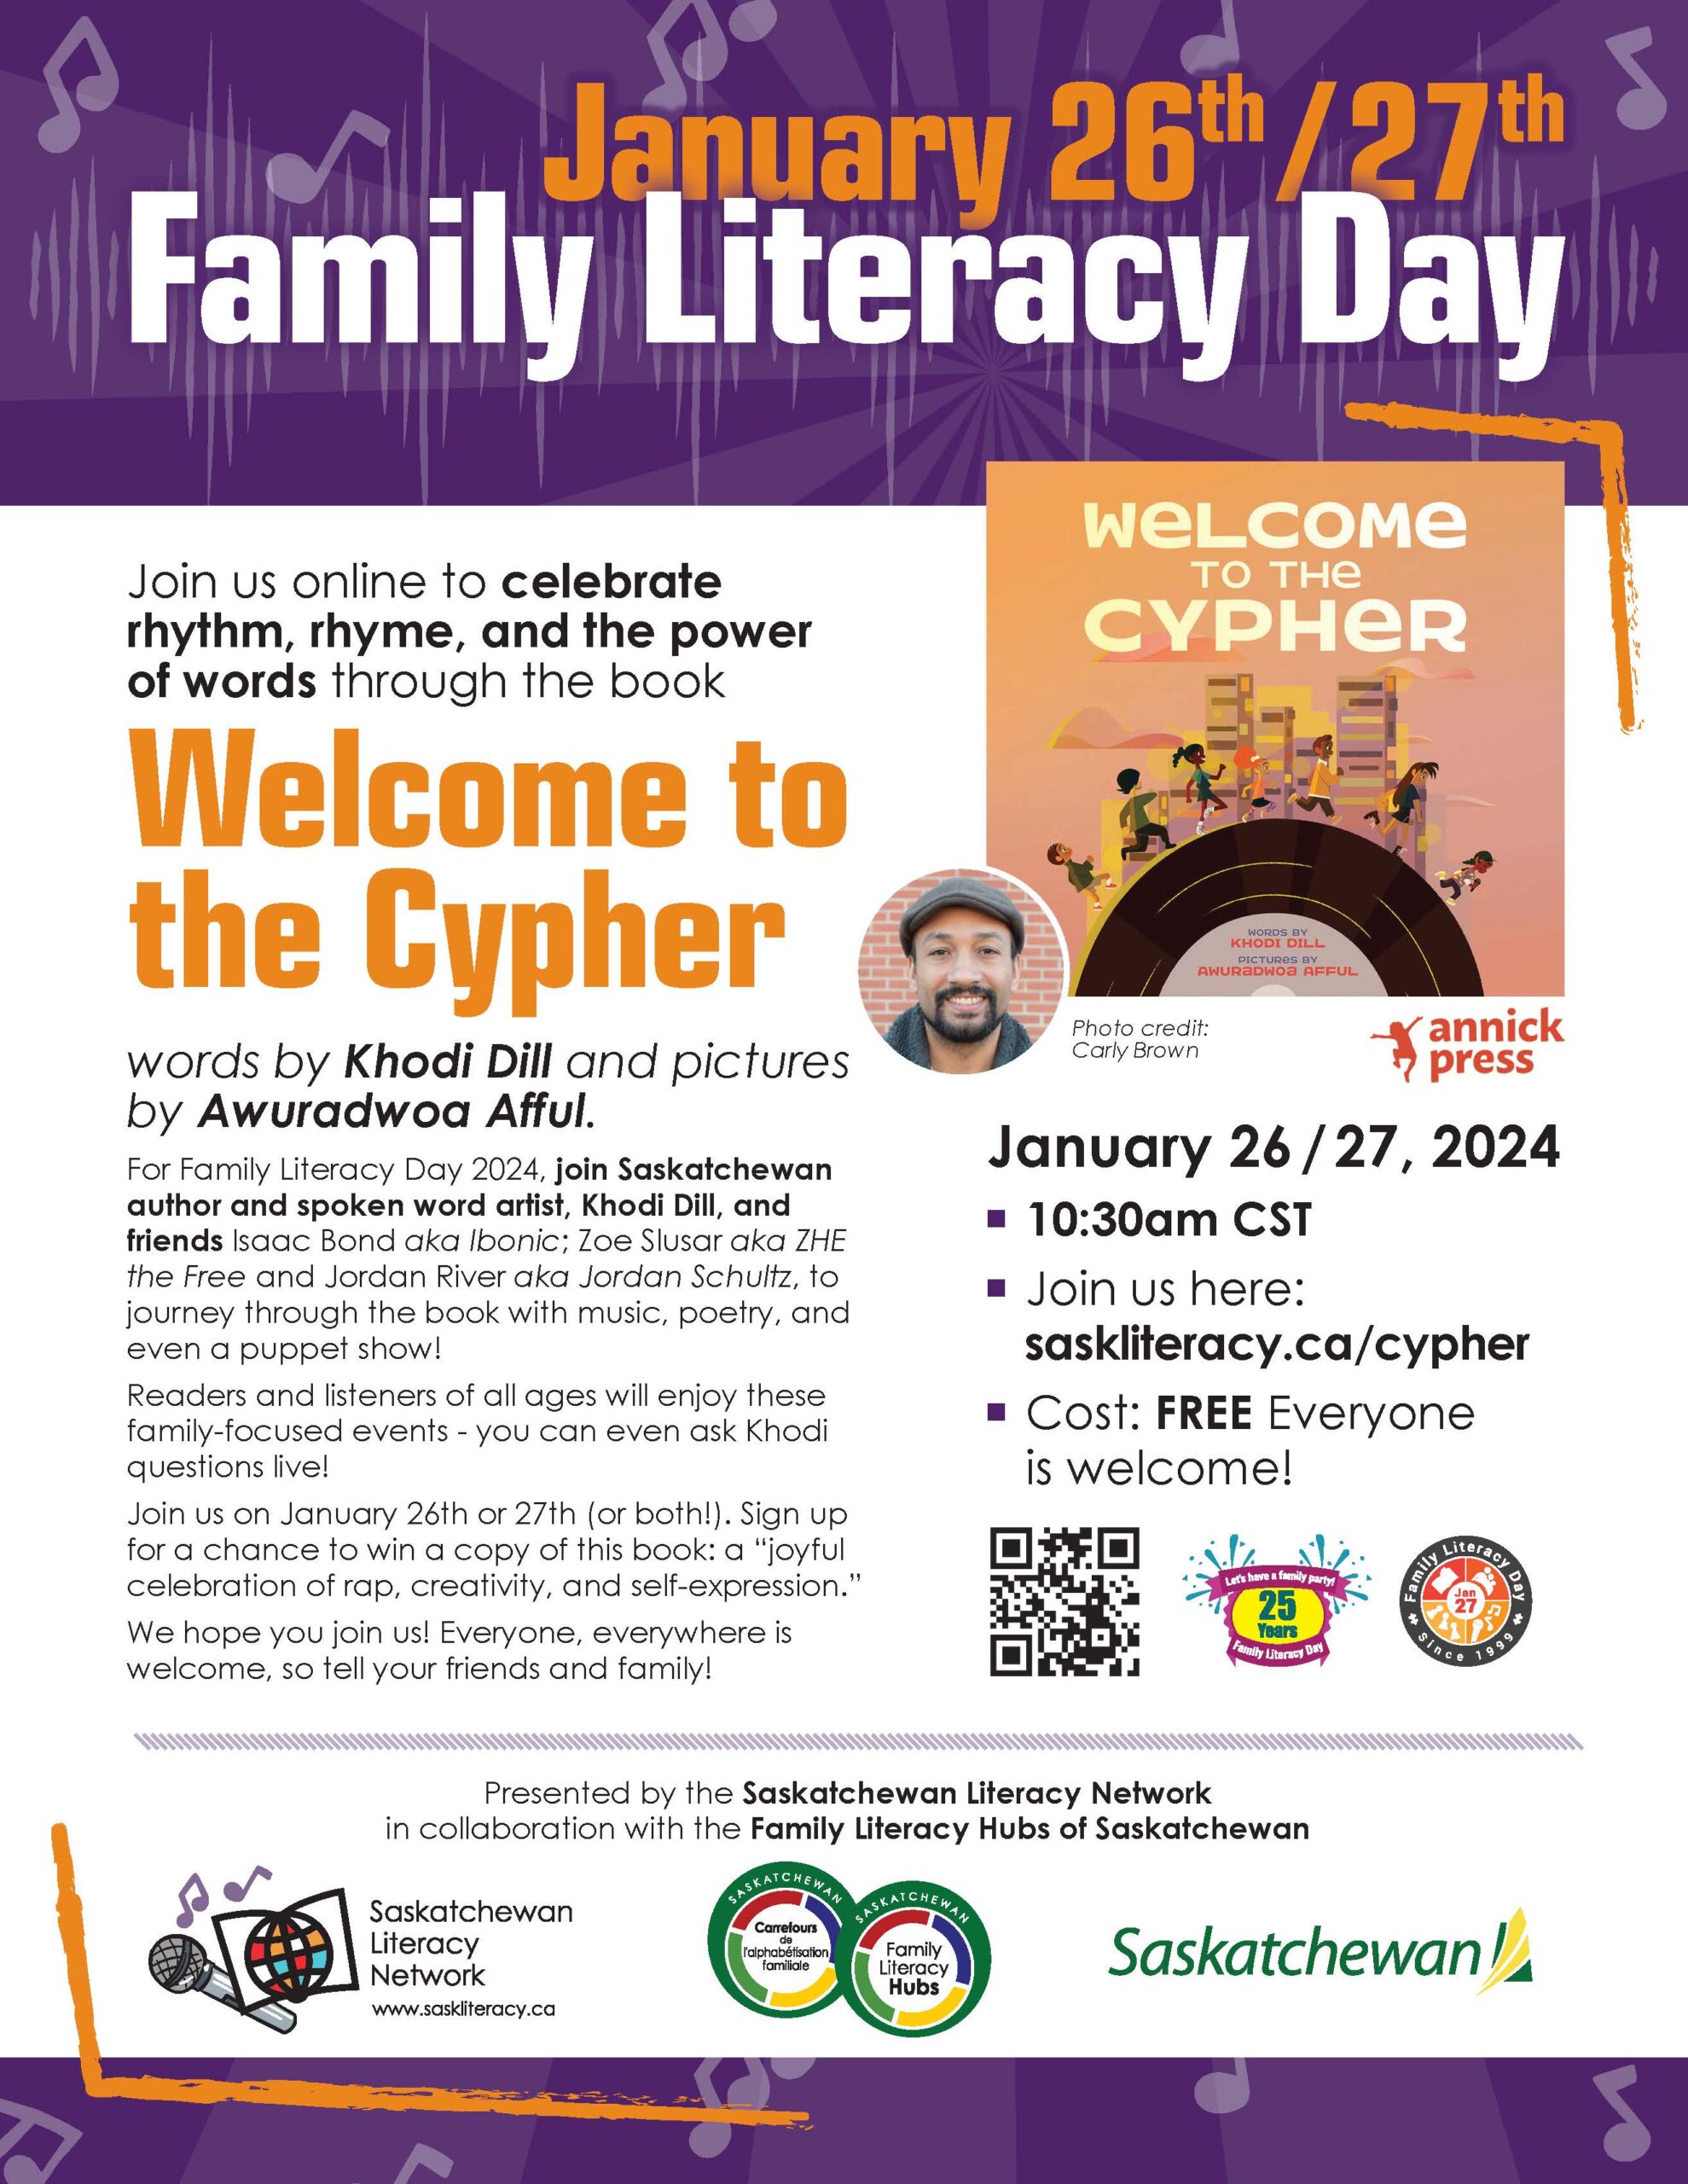 Family Literacy Day in Saskatchewan Saskatchewan Literacy Network